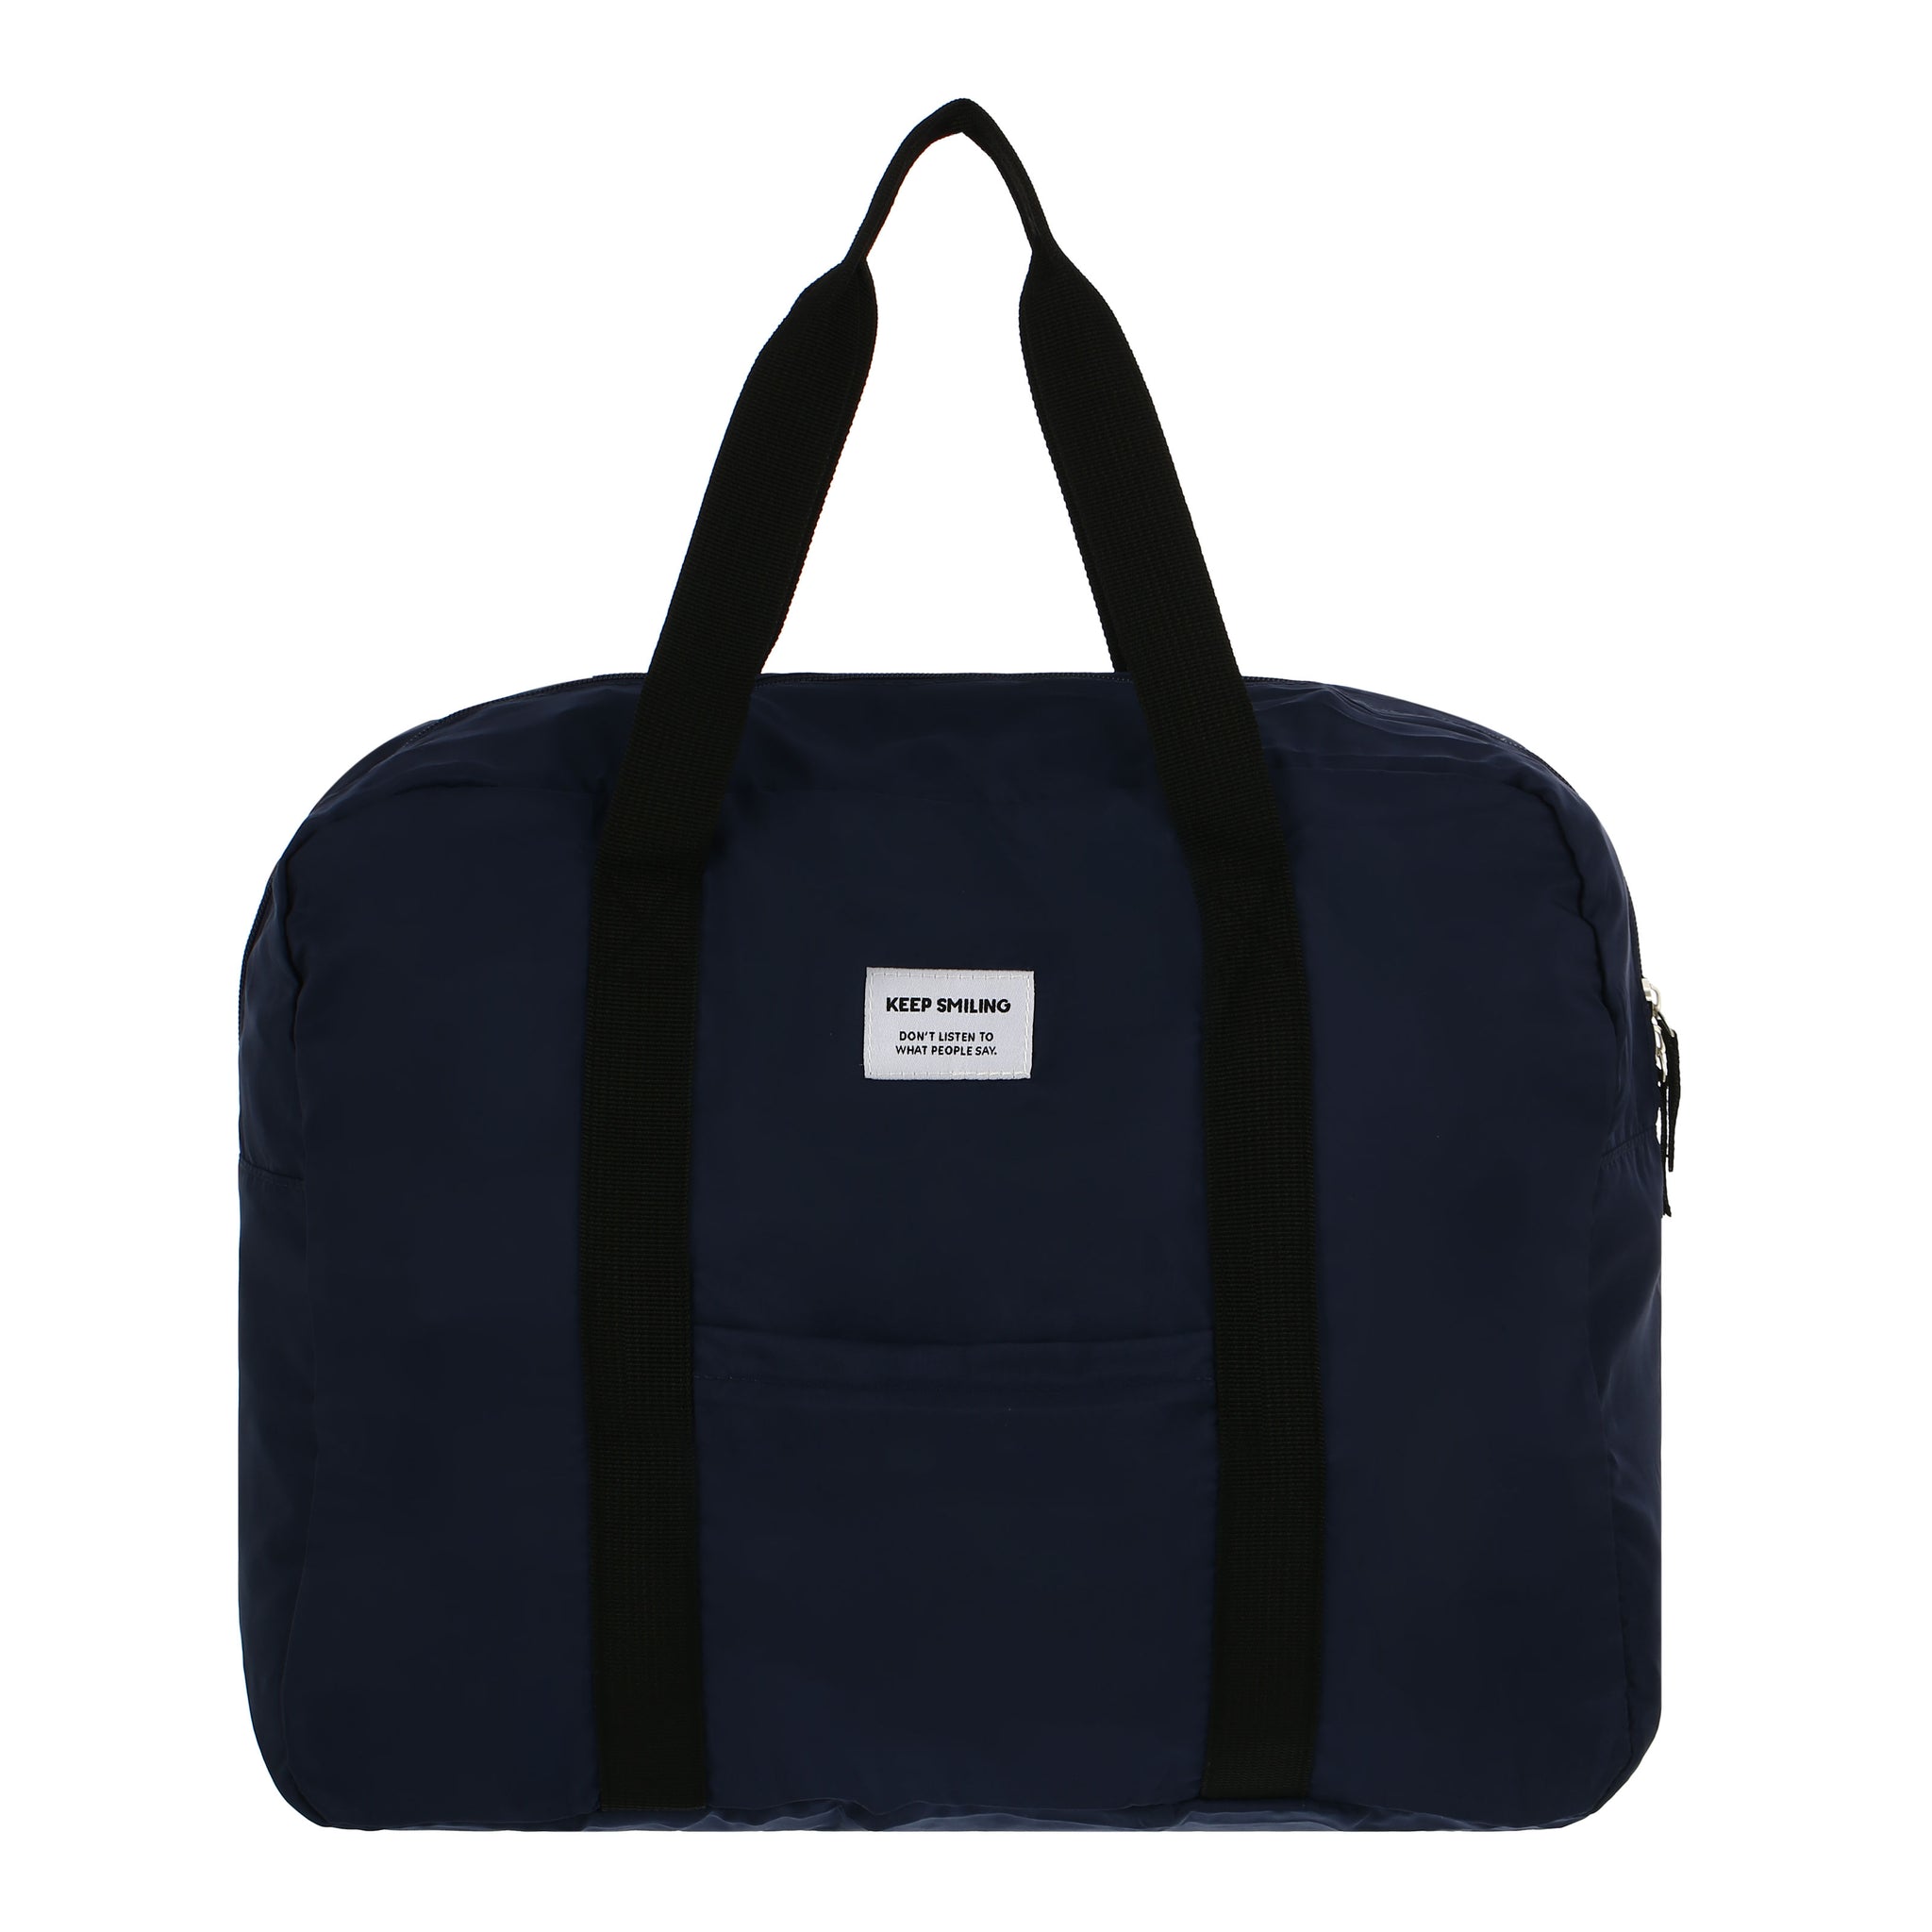 Minigo Foldable Tote Bag (Navy Blue) - MINISO